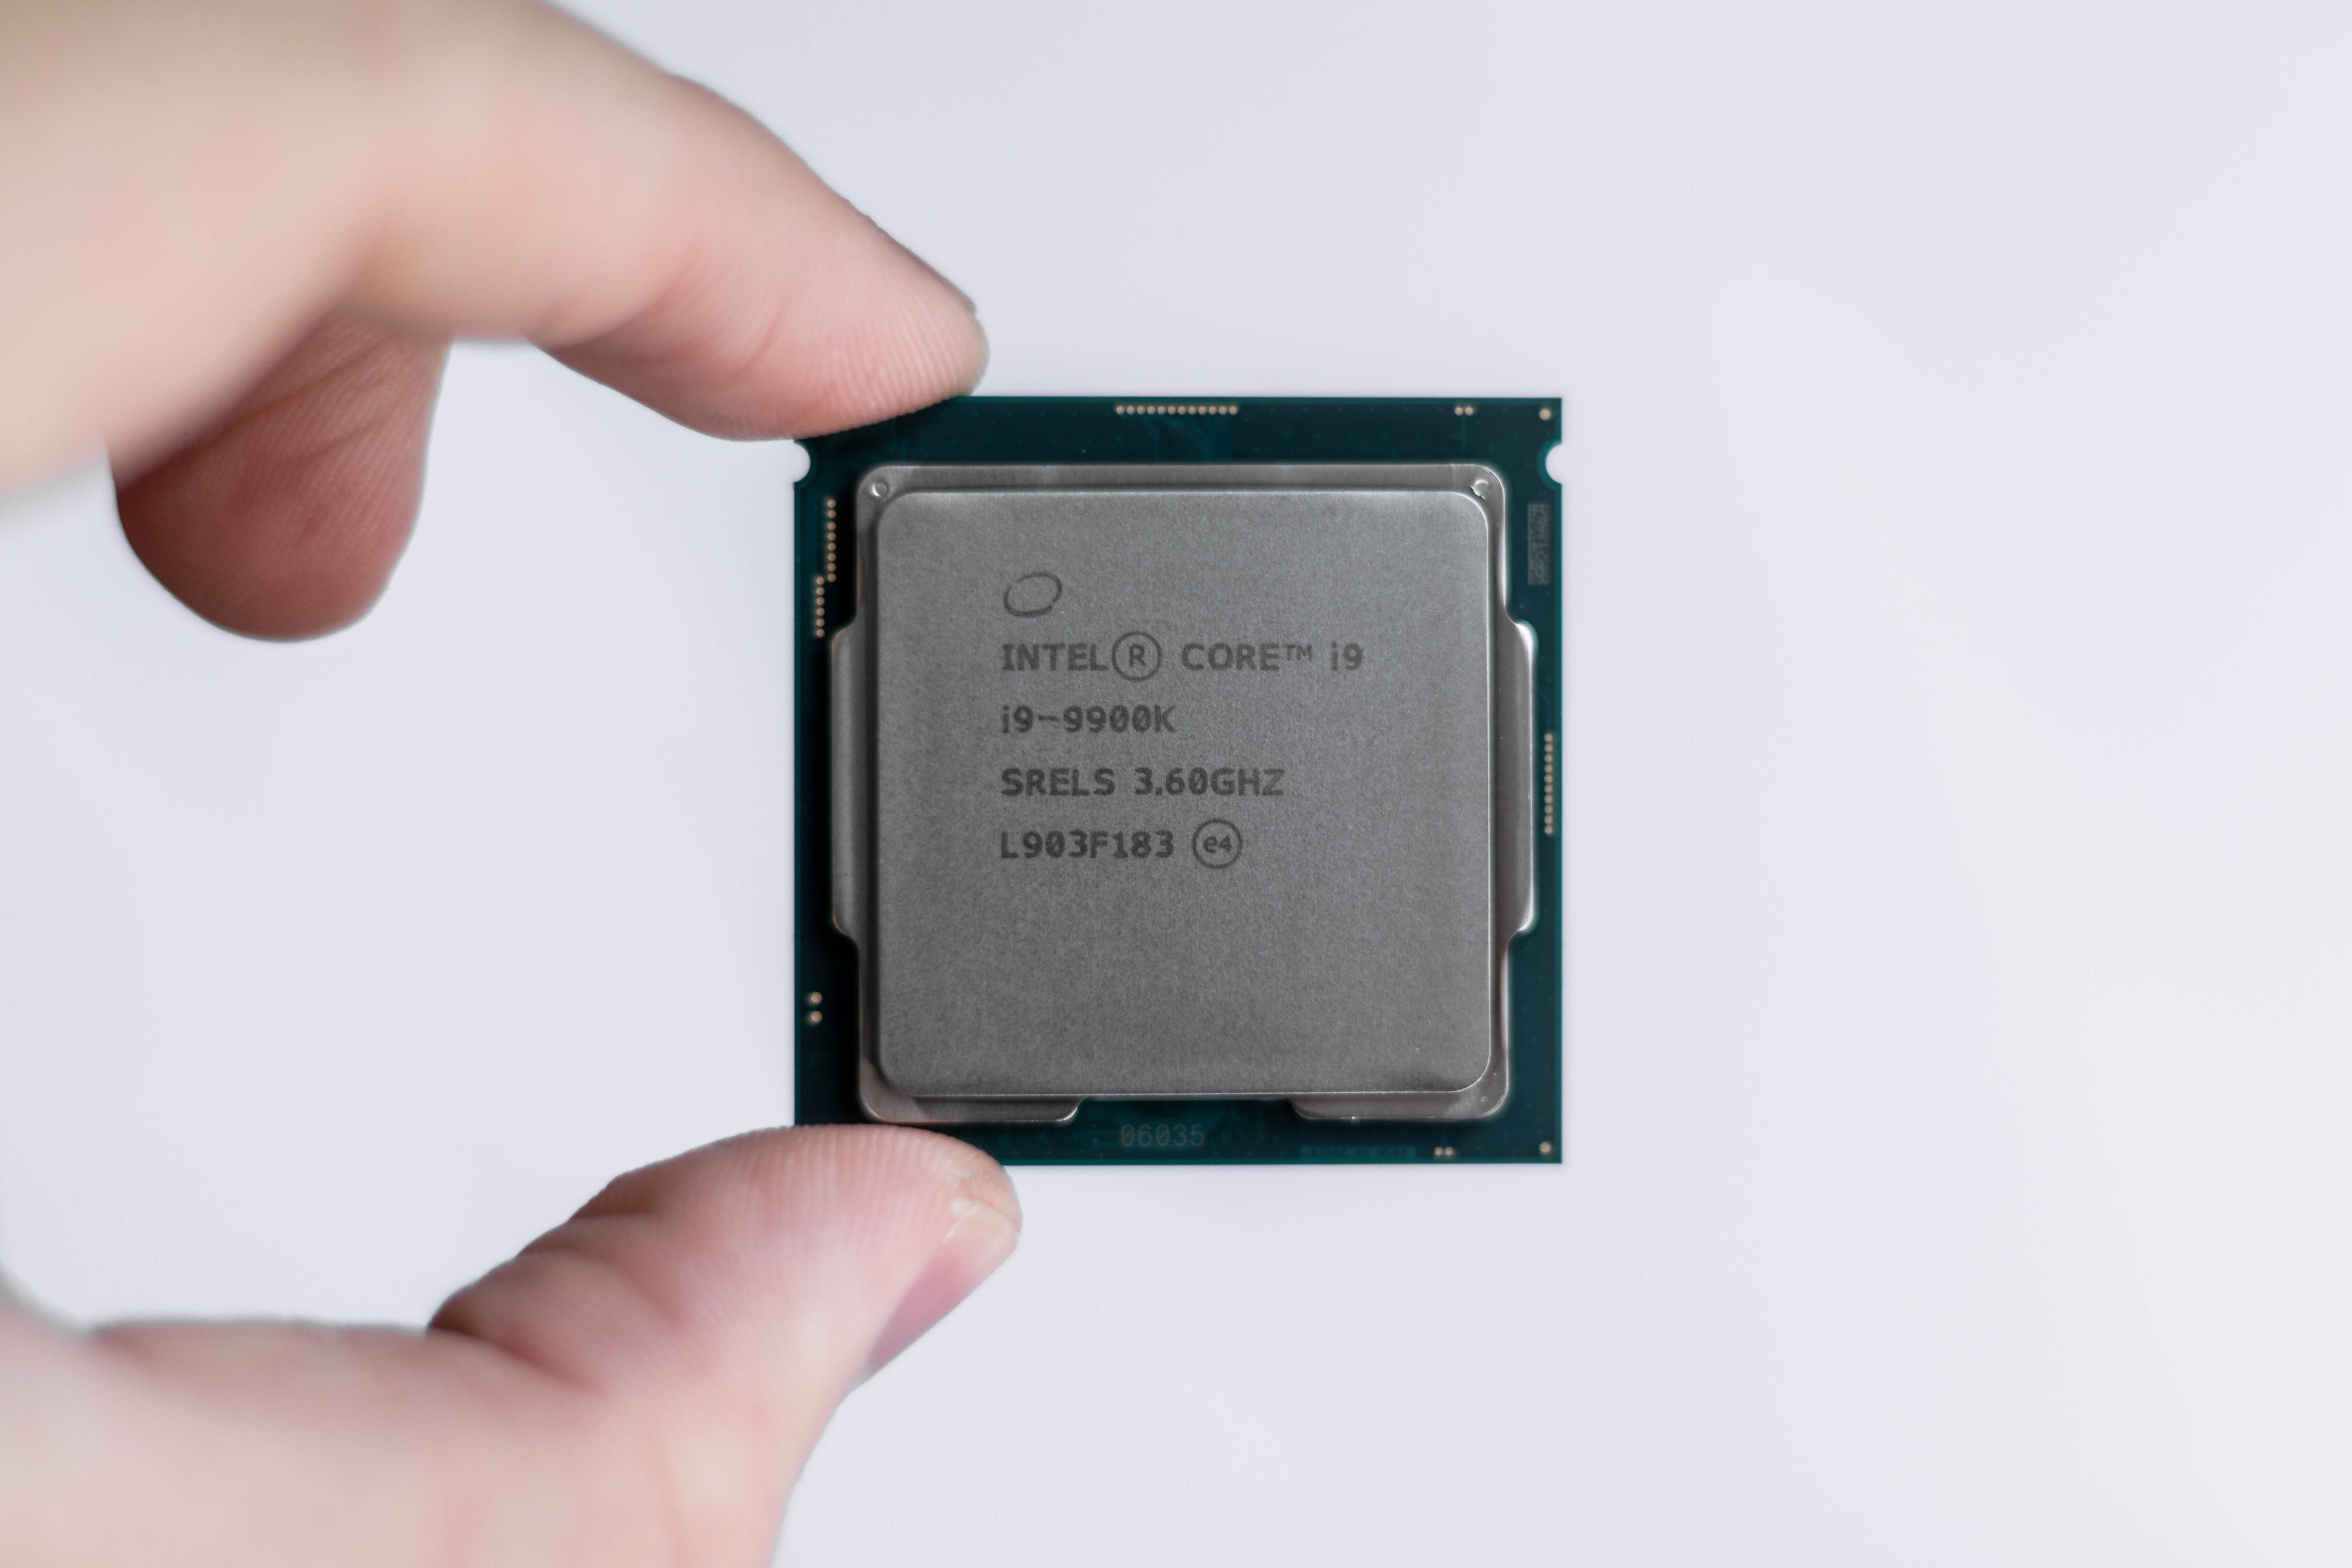 Intel Core i9-9900K processor